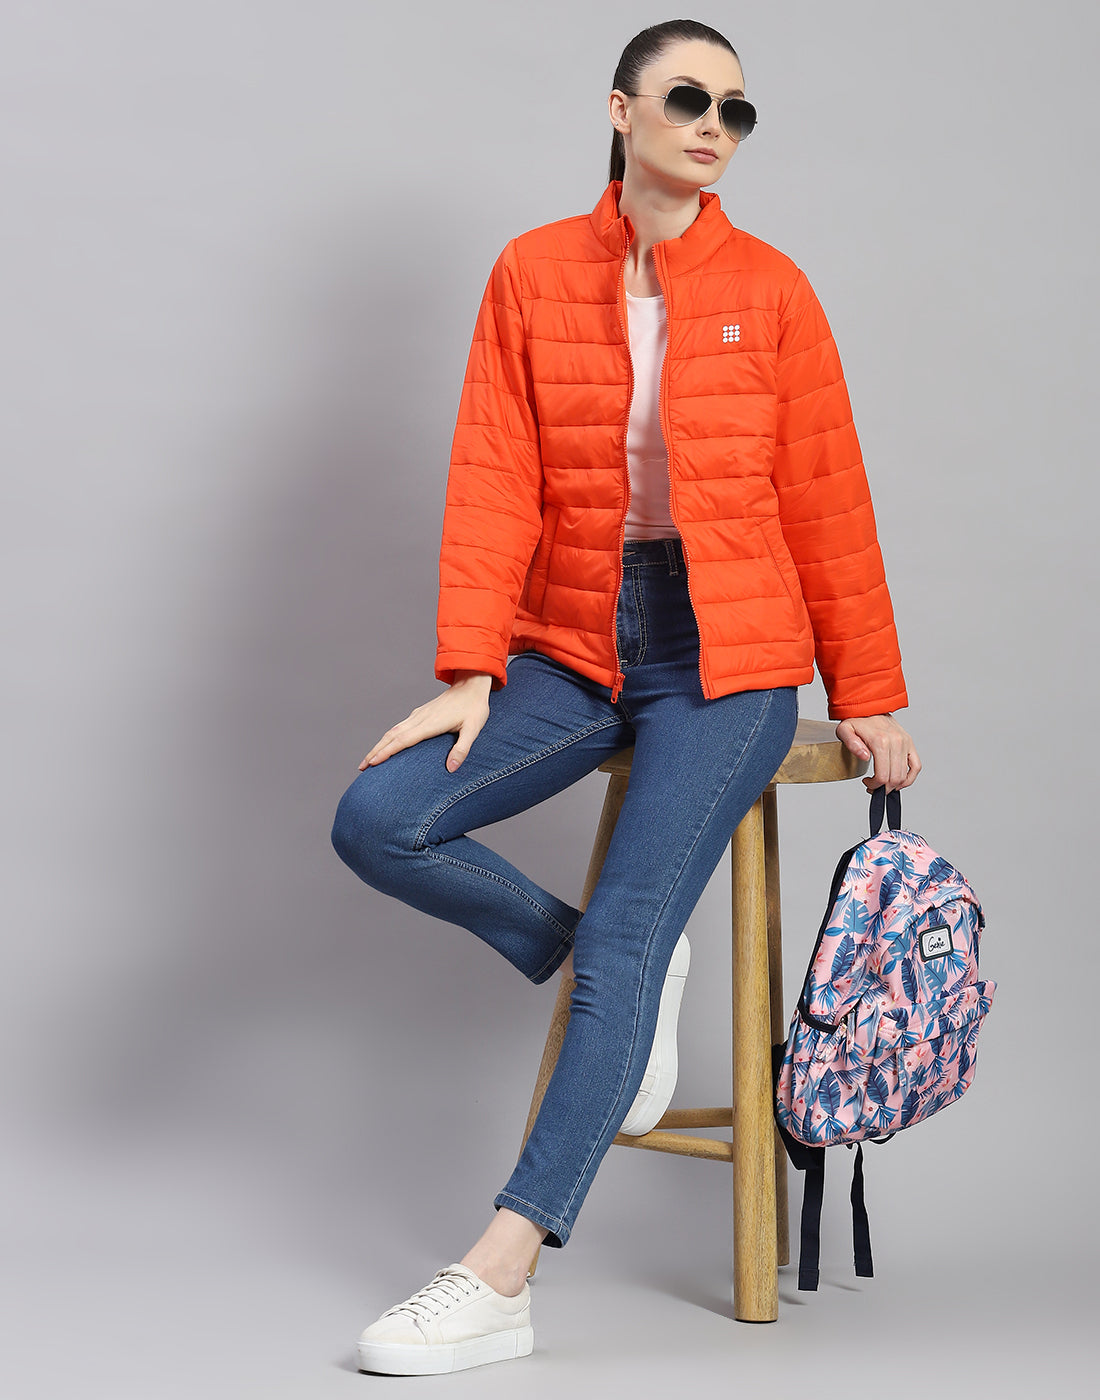 Women Orange Solid Stand Collar Full Sleeve Jacket